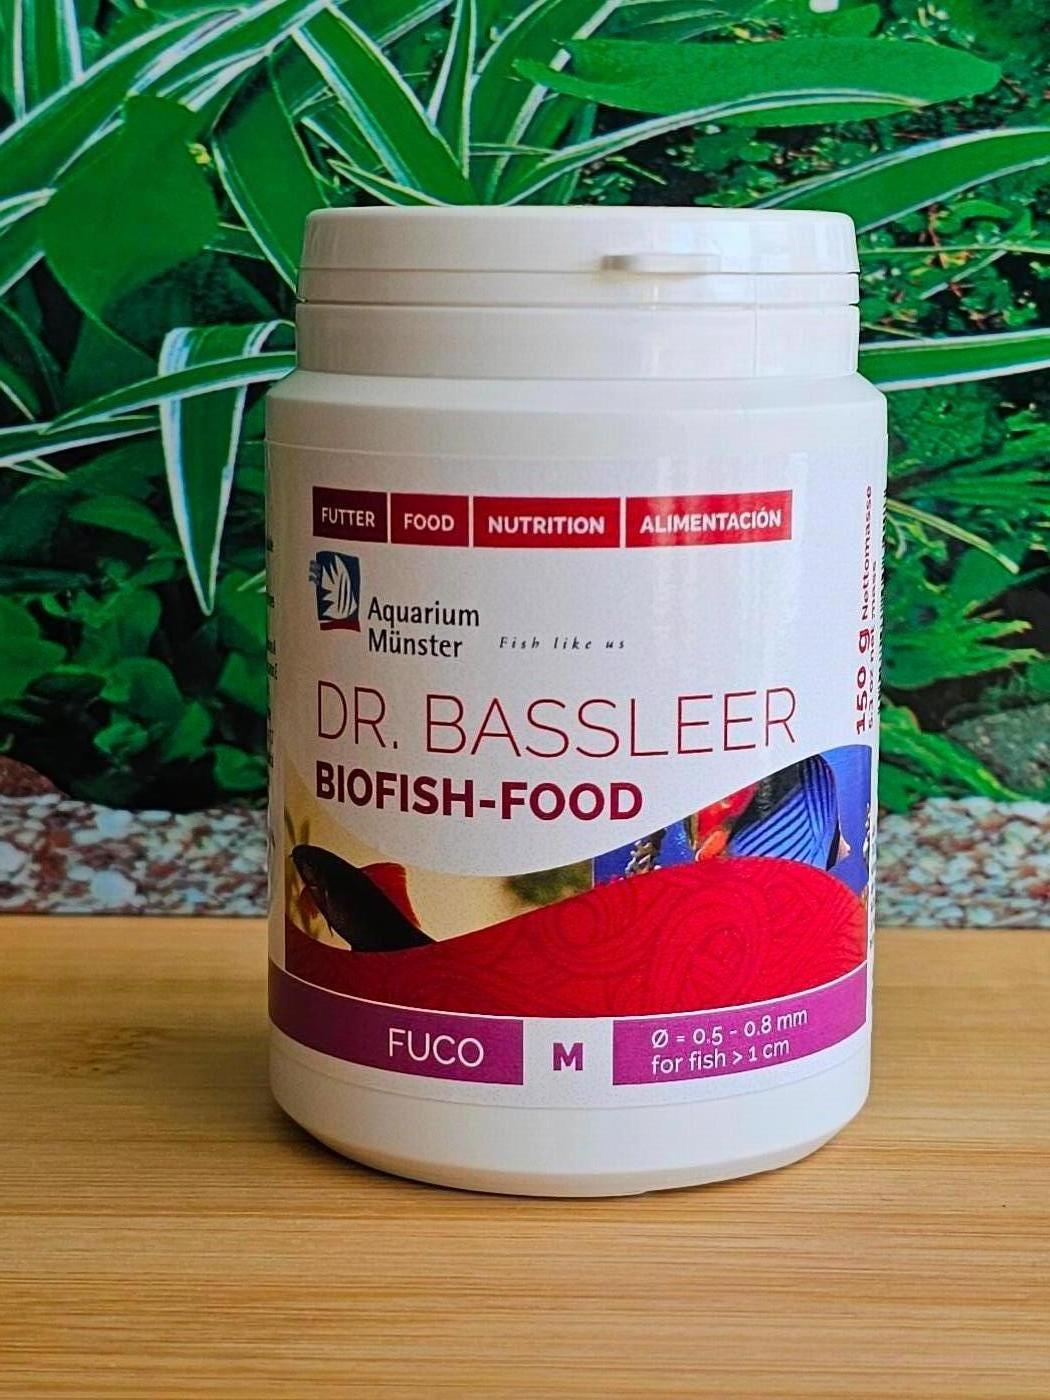 Dr. Bassleer Biofish-Food FUCO  60g-68g